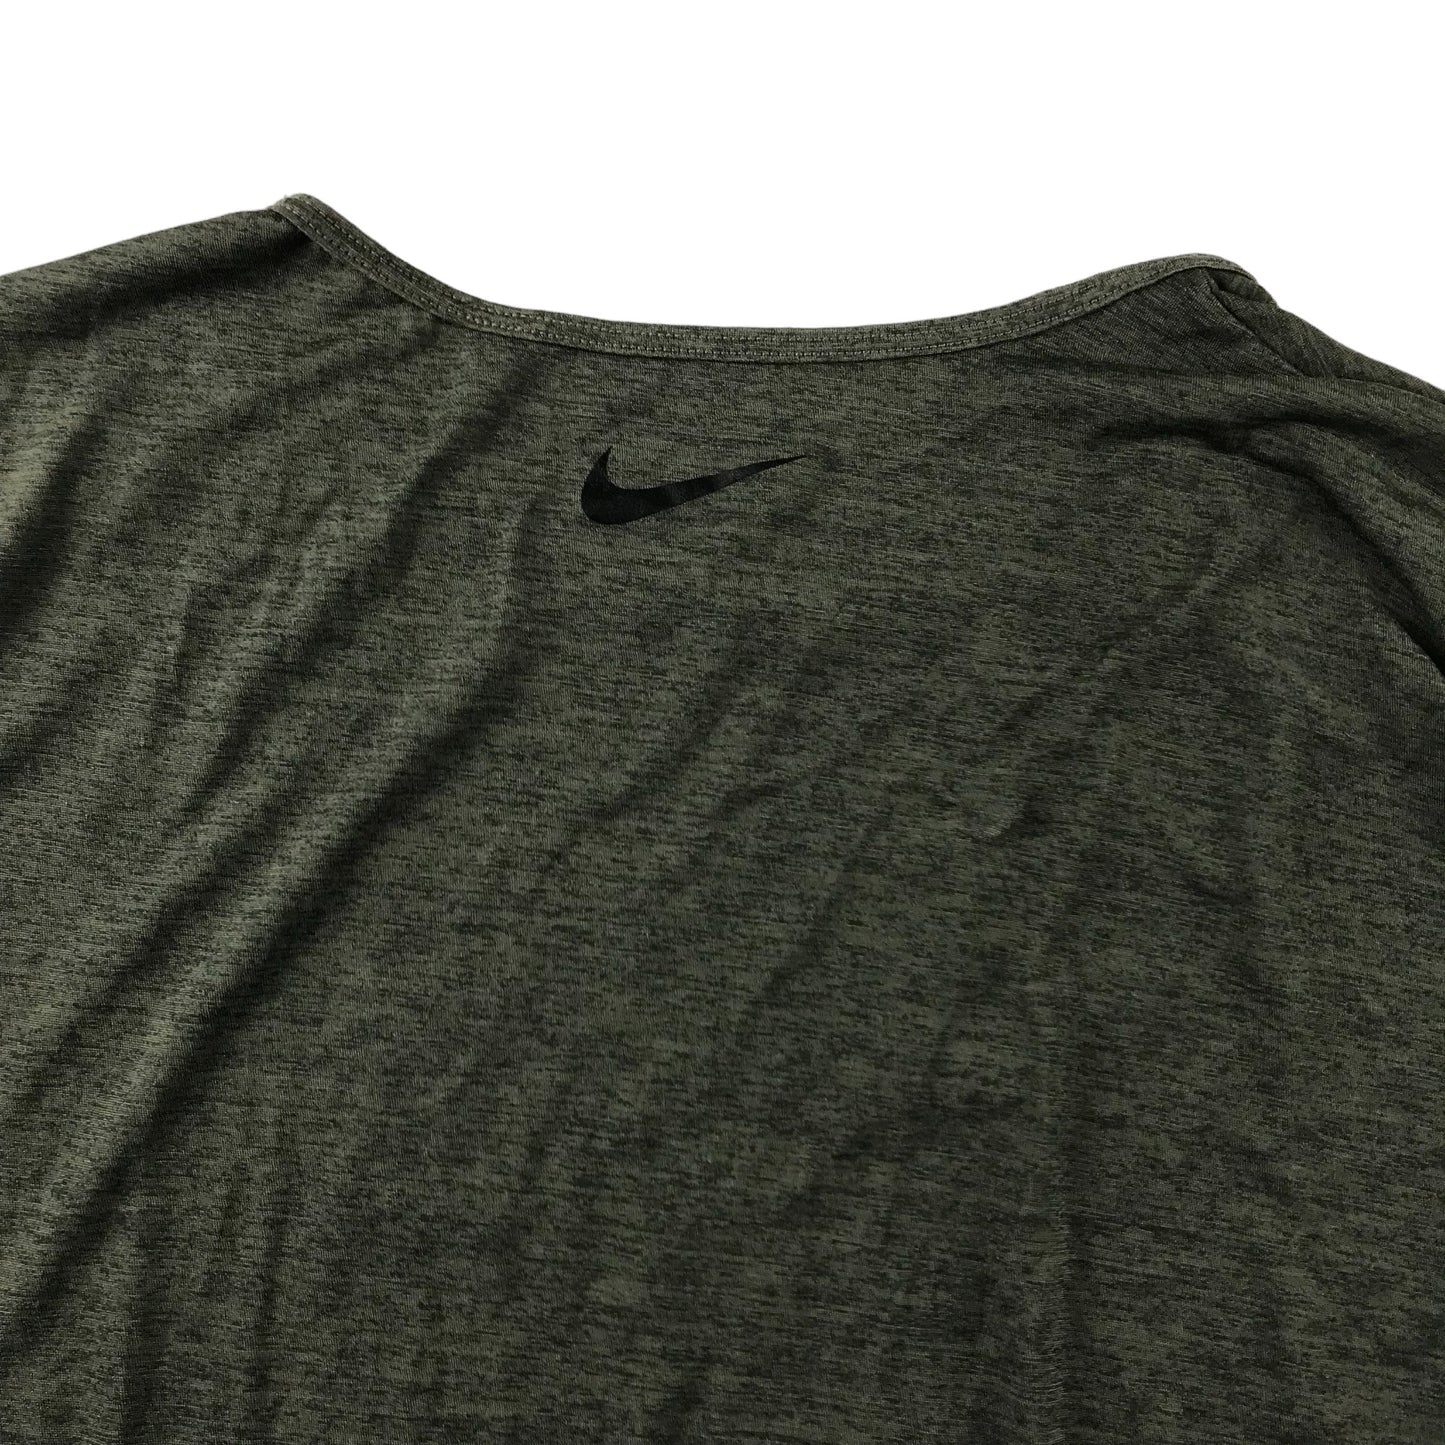 Nike T-shirt Size Women L Dark Grey Slightly Cropped Sporty Tee